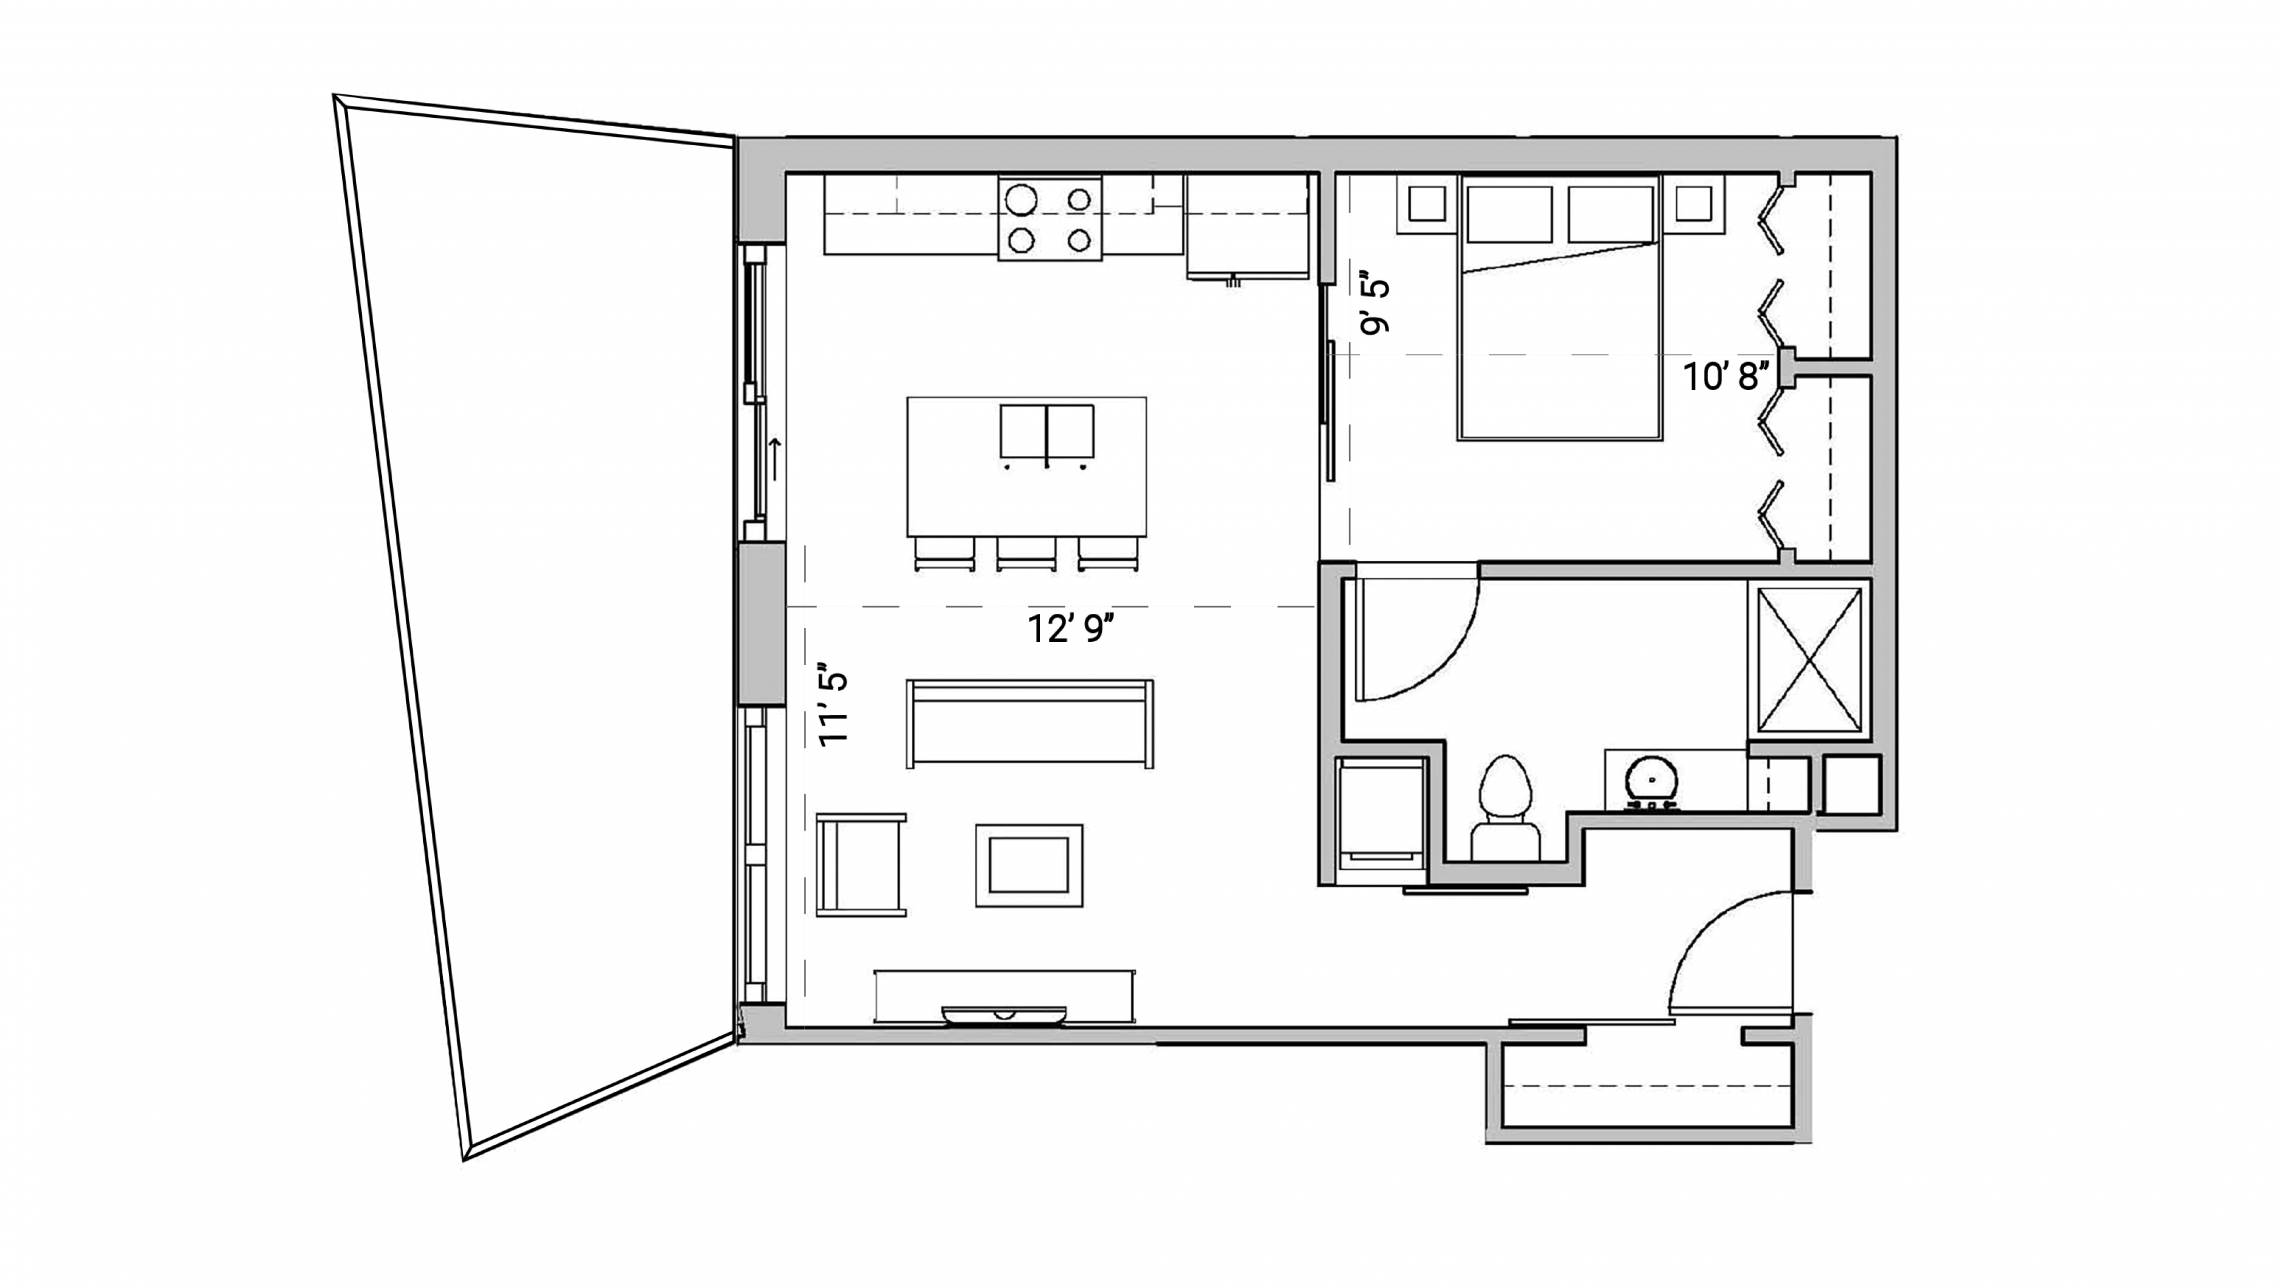 ULI - Seven27 - Apartment 306 - One Bedroom, One Bathroom